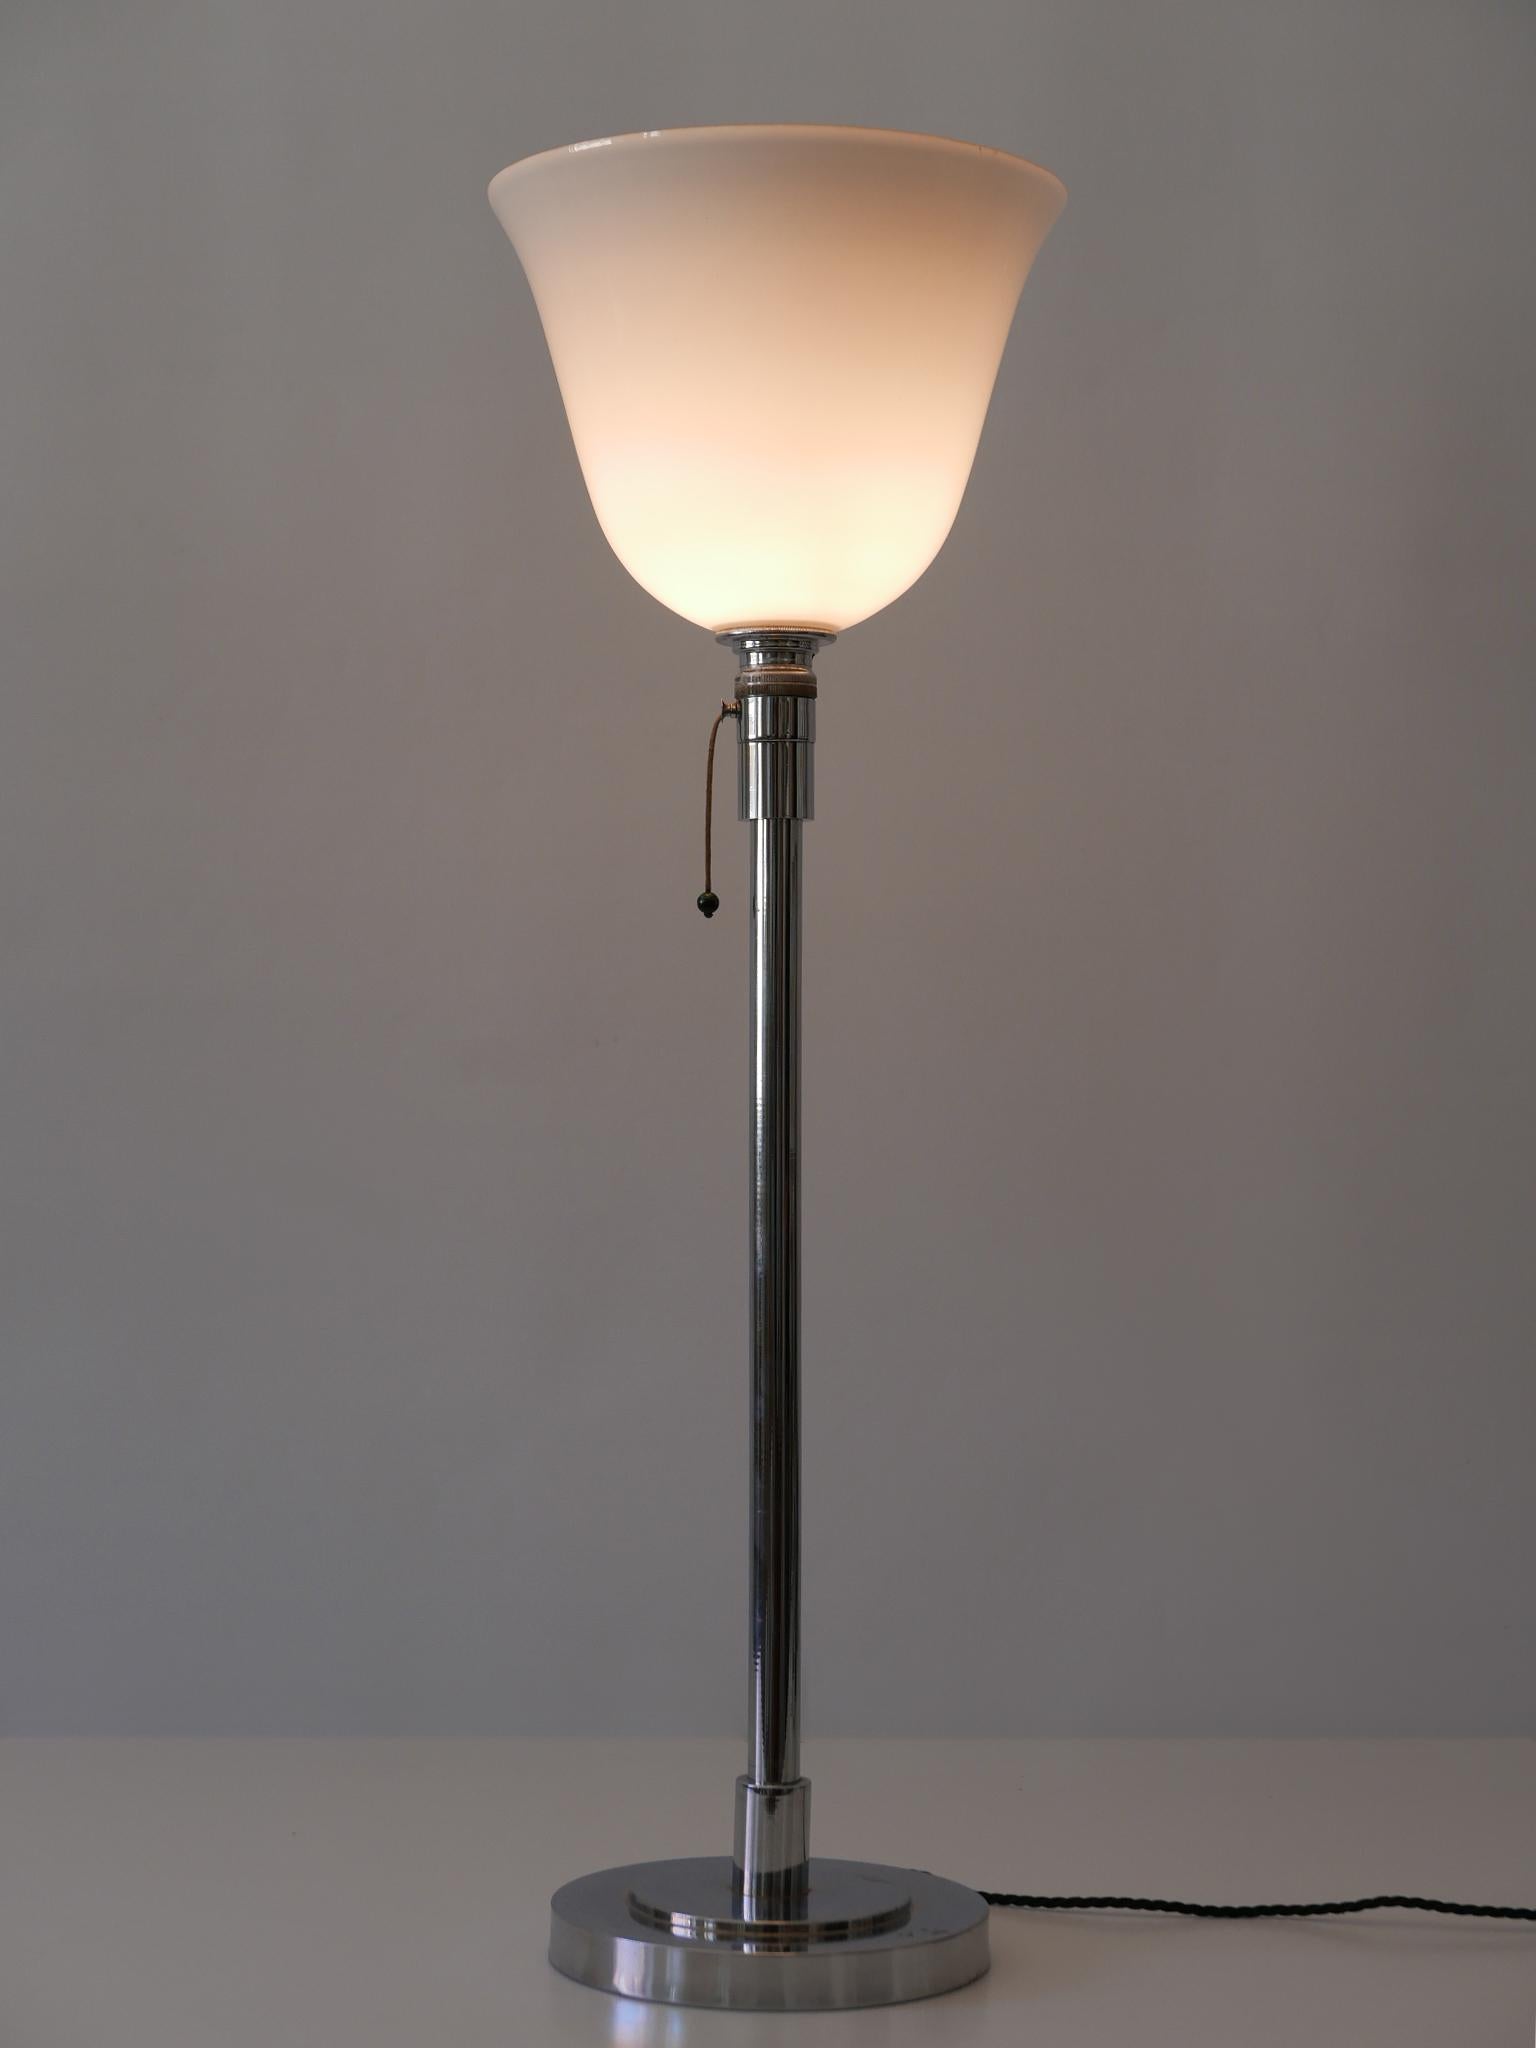 Elegant Art Deco Bauhaus Table Lamp or Floor Light by Mazda Paris, France, 1930s For Sale 7